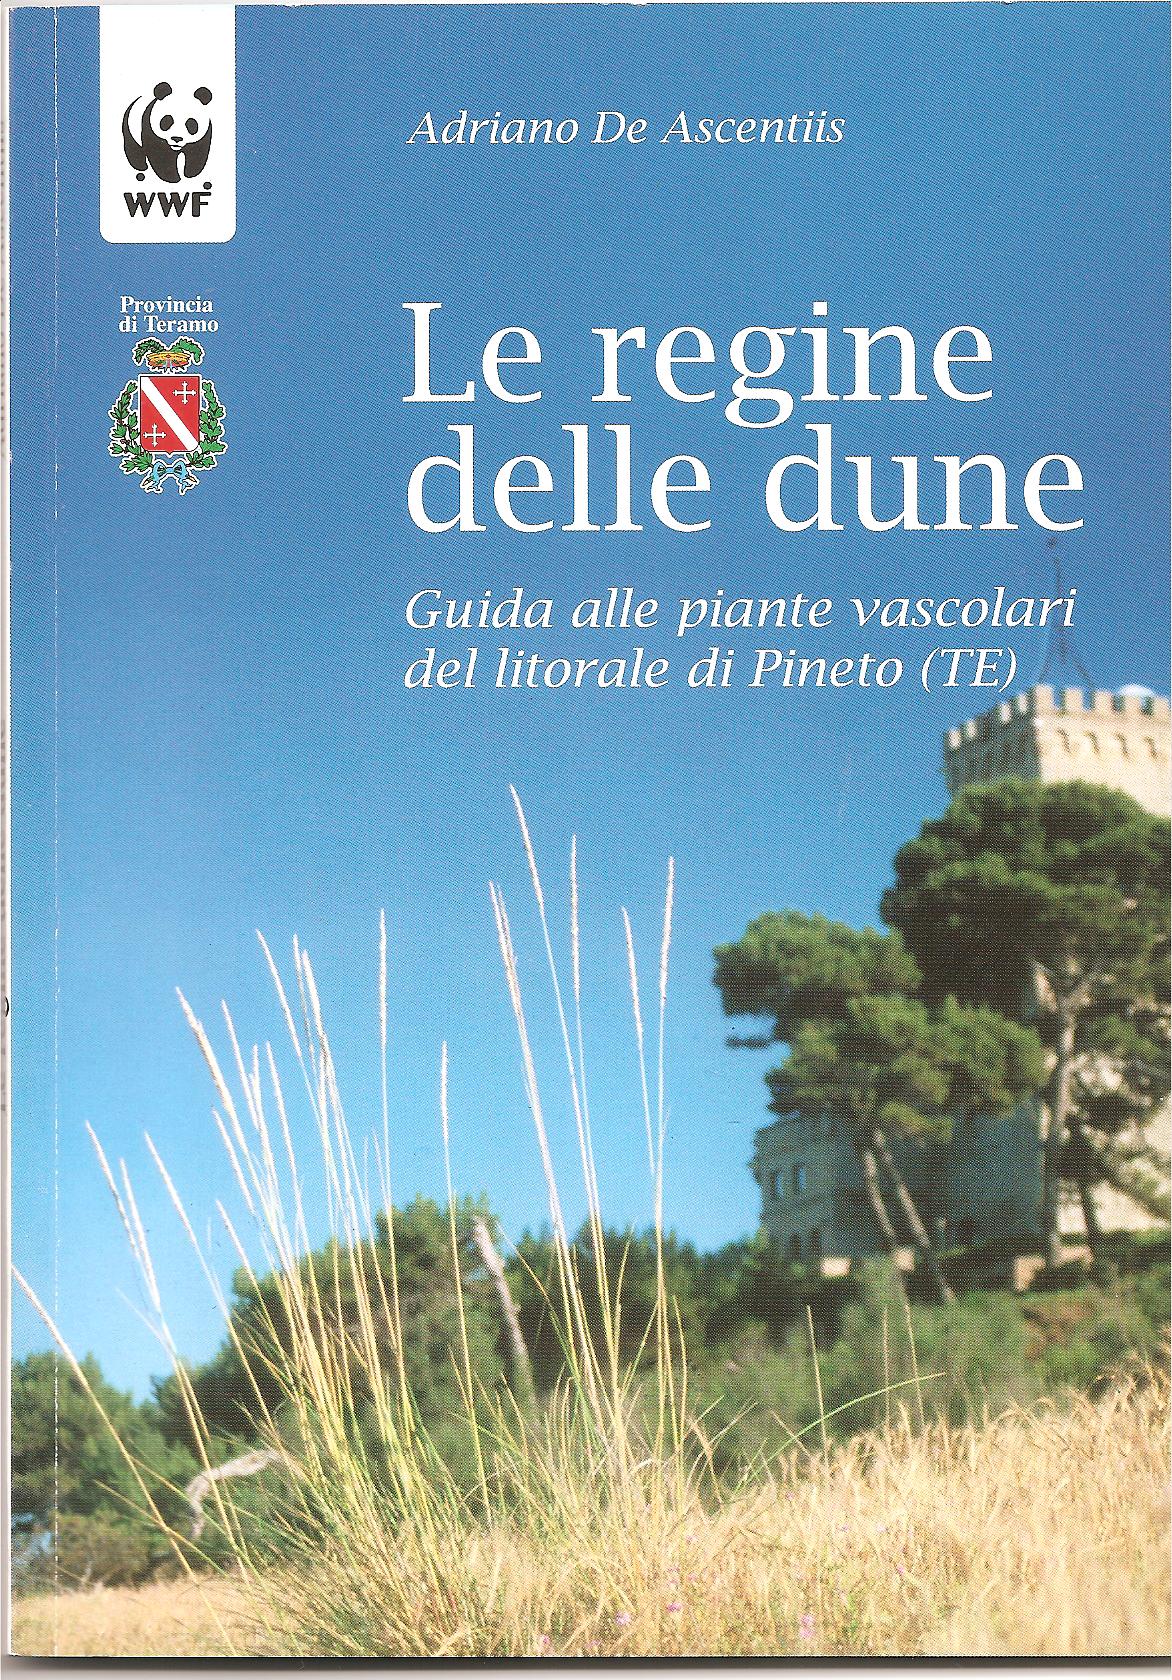 Copertina_le_regine_delle_dune